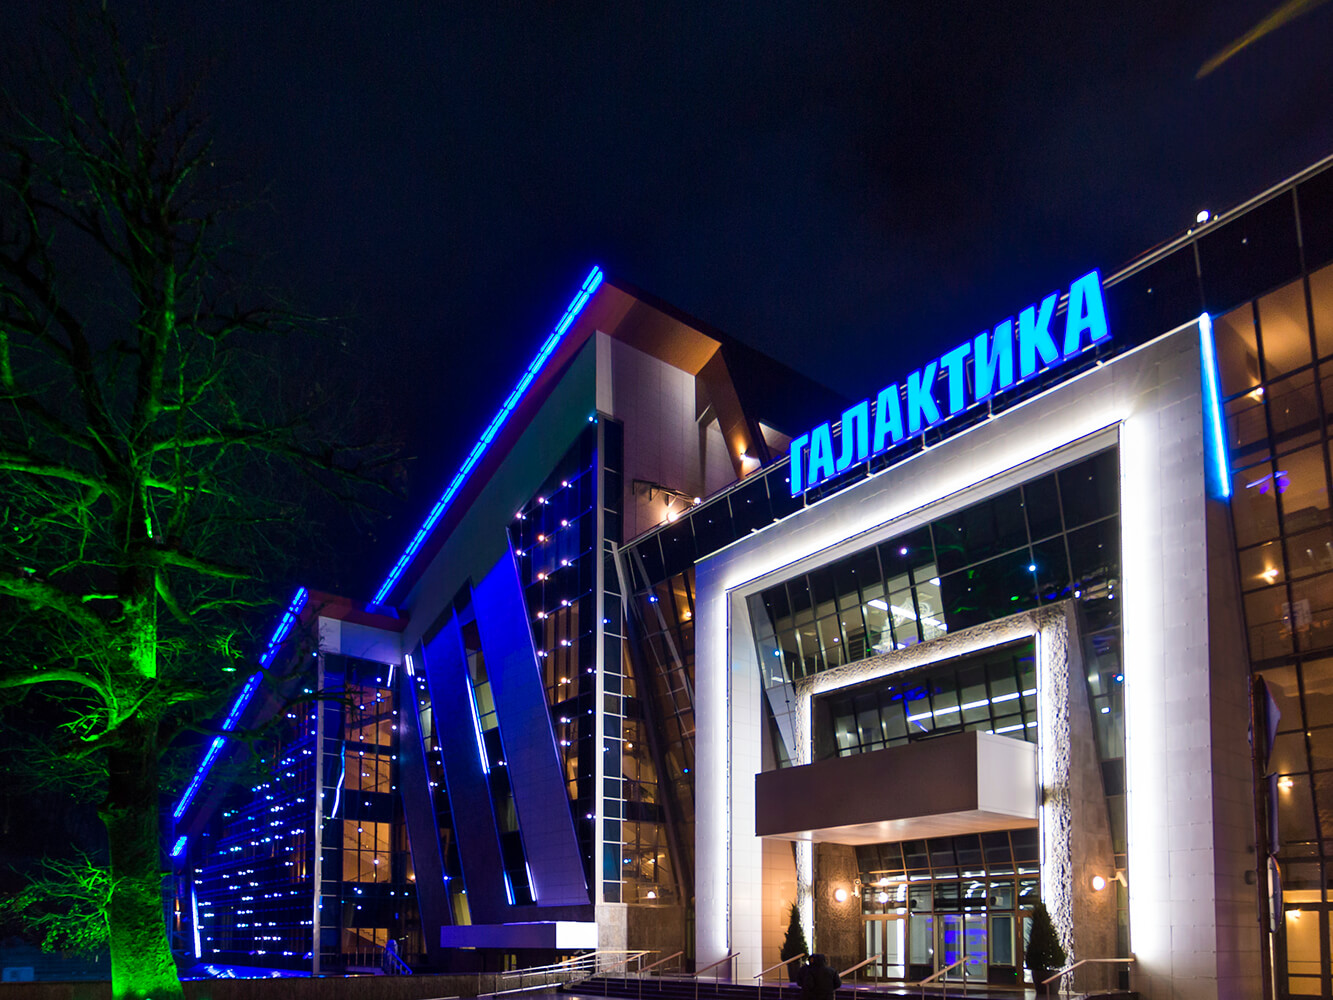 Gazprom Galaktika Community Center – Sochi, Russia